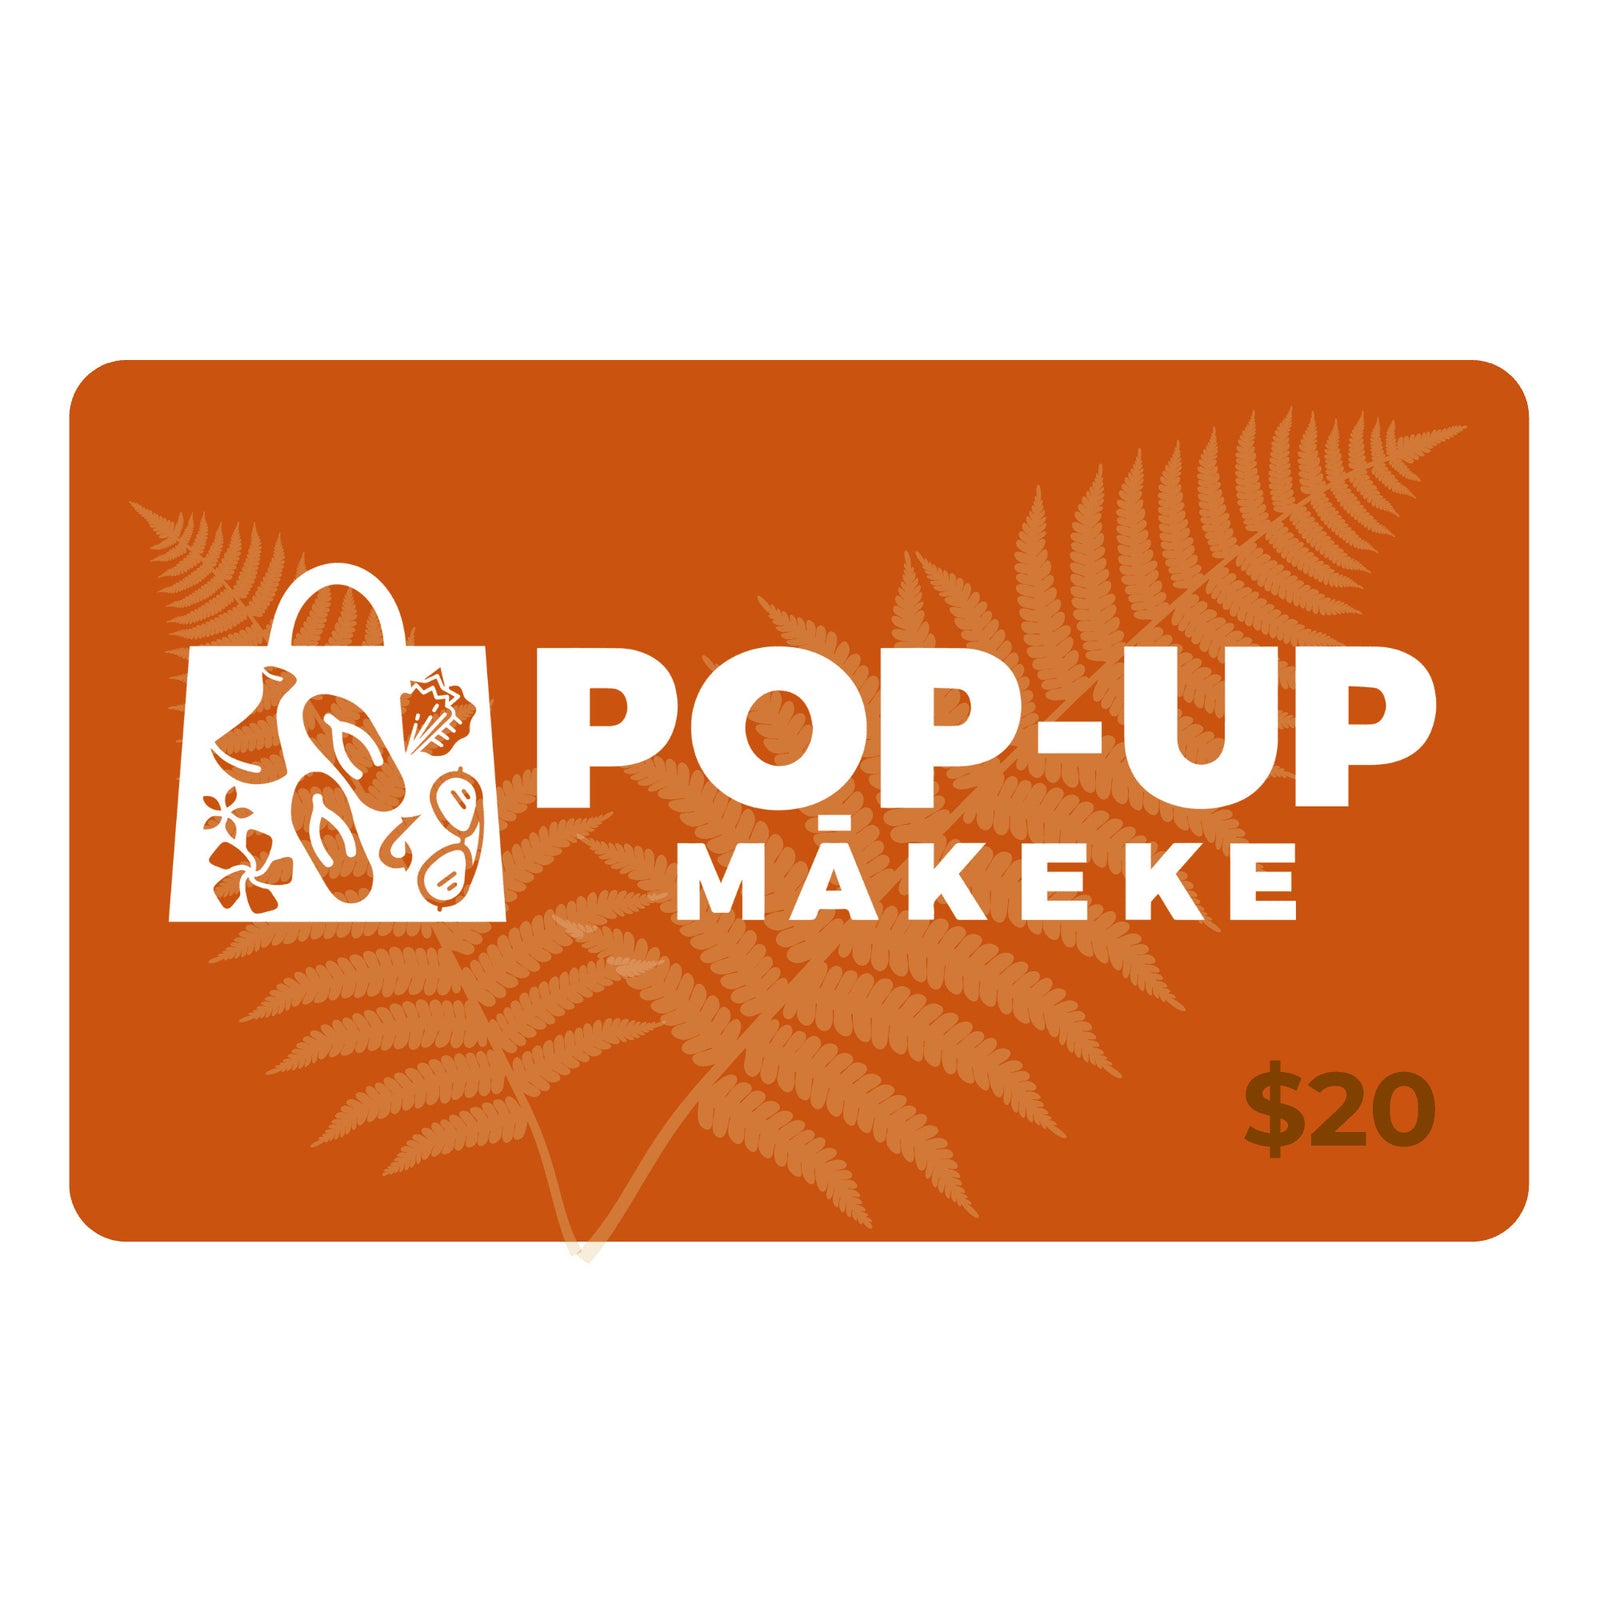 Pop-Up Mākeke $20 Gift Card